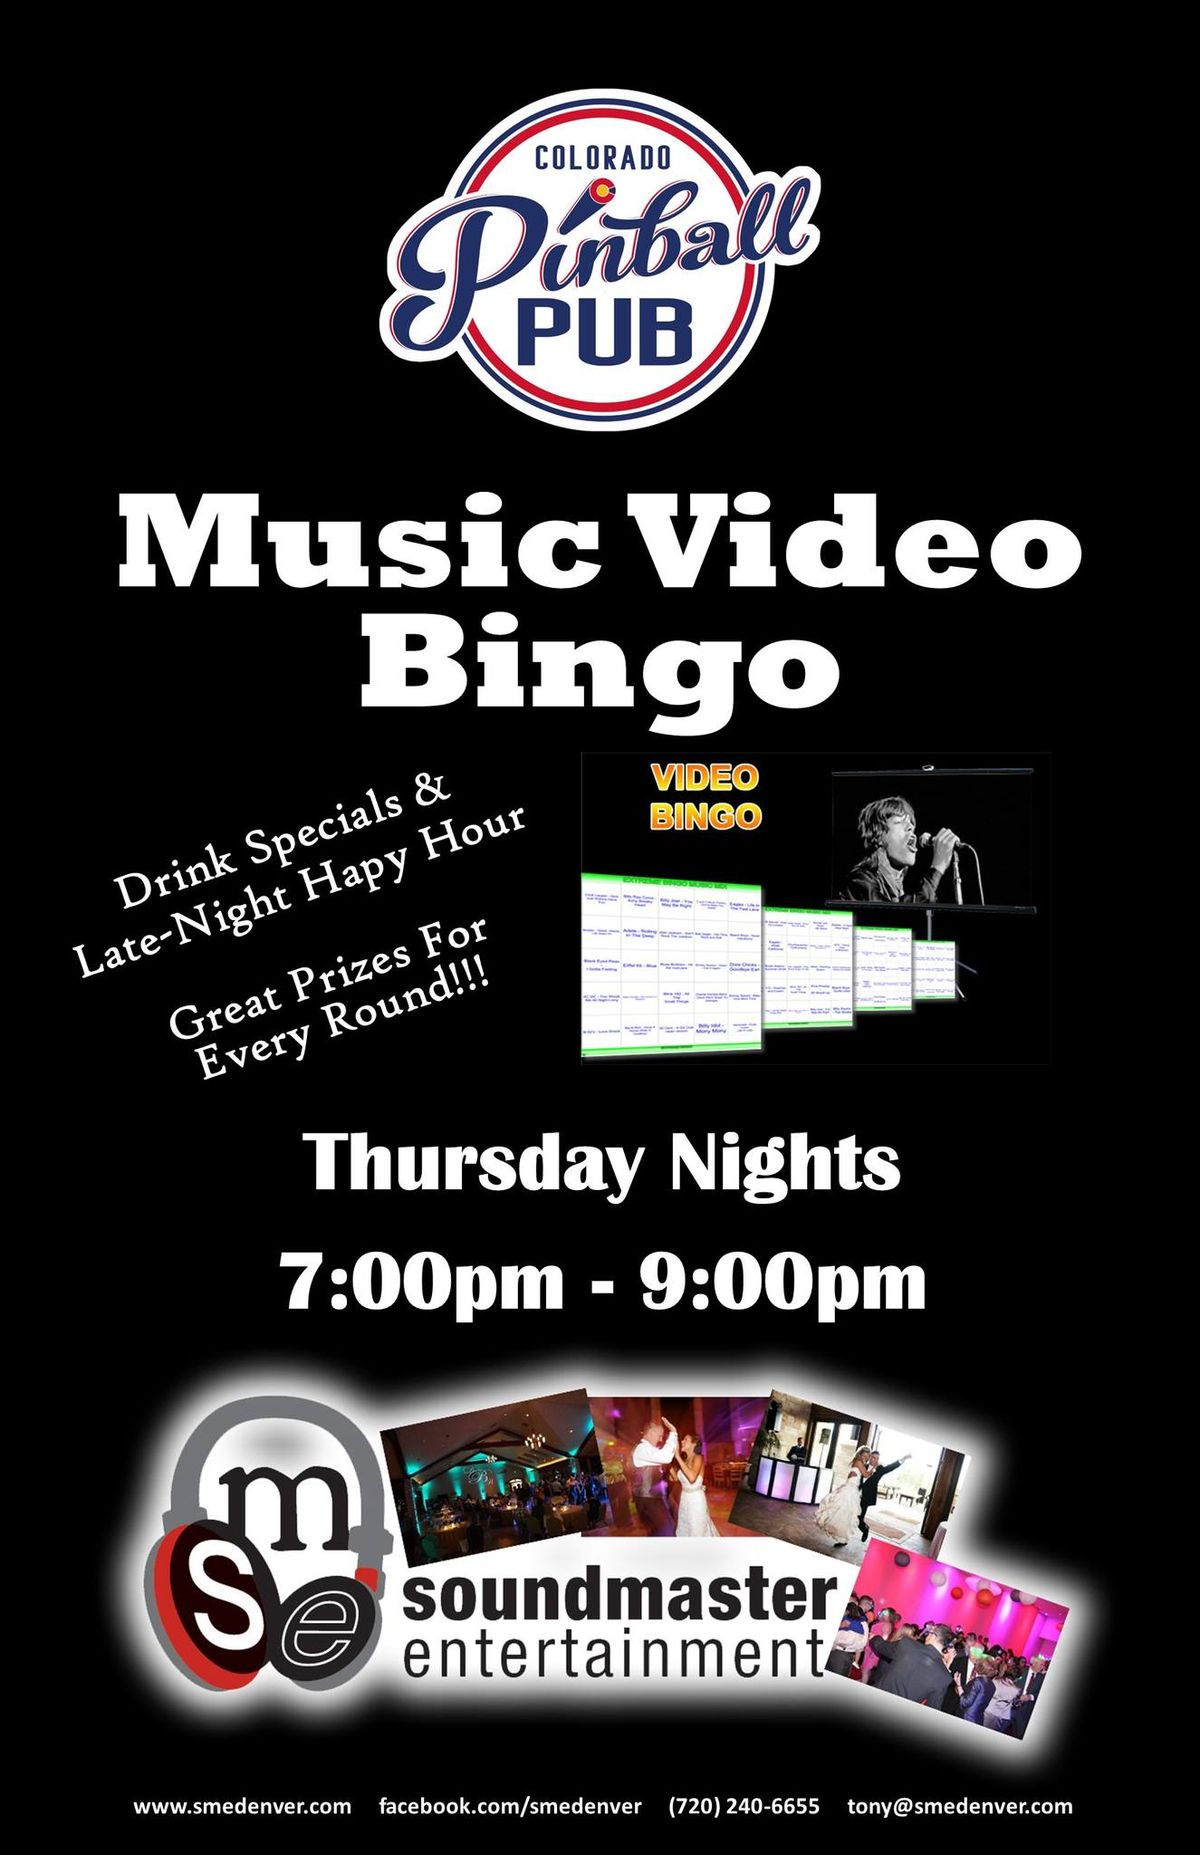 MUSIC VIDEO BINGO every Thursday 7pm @ Colorado Pinball Pub 